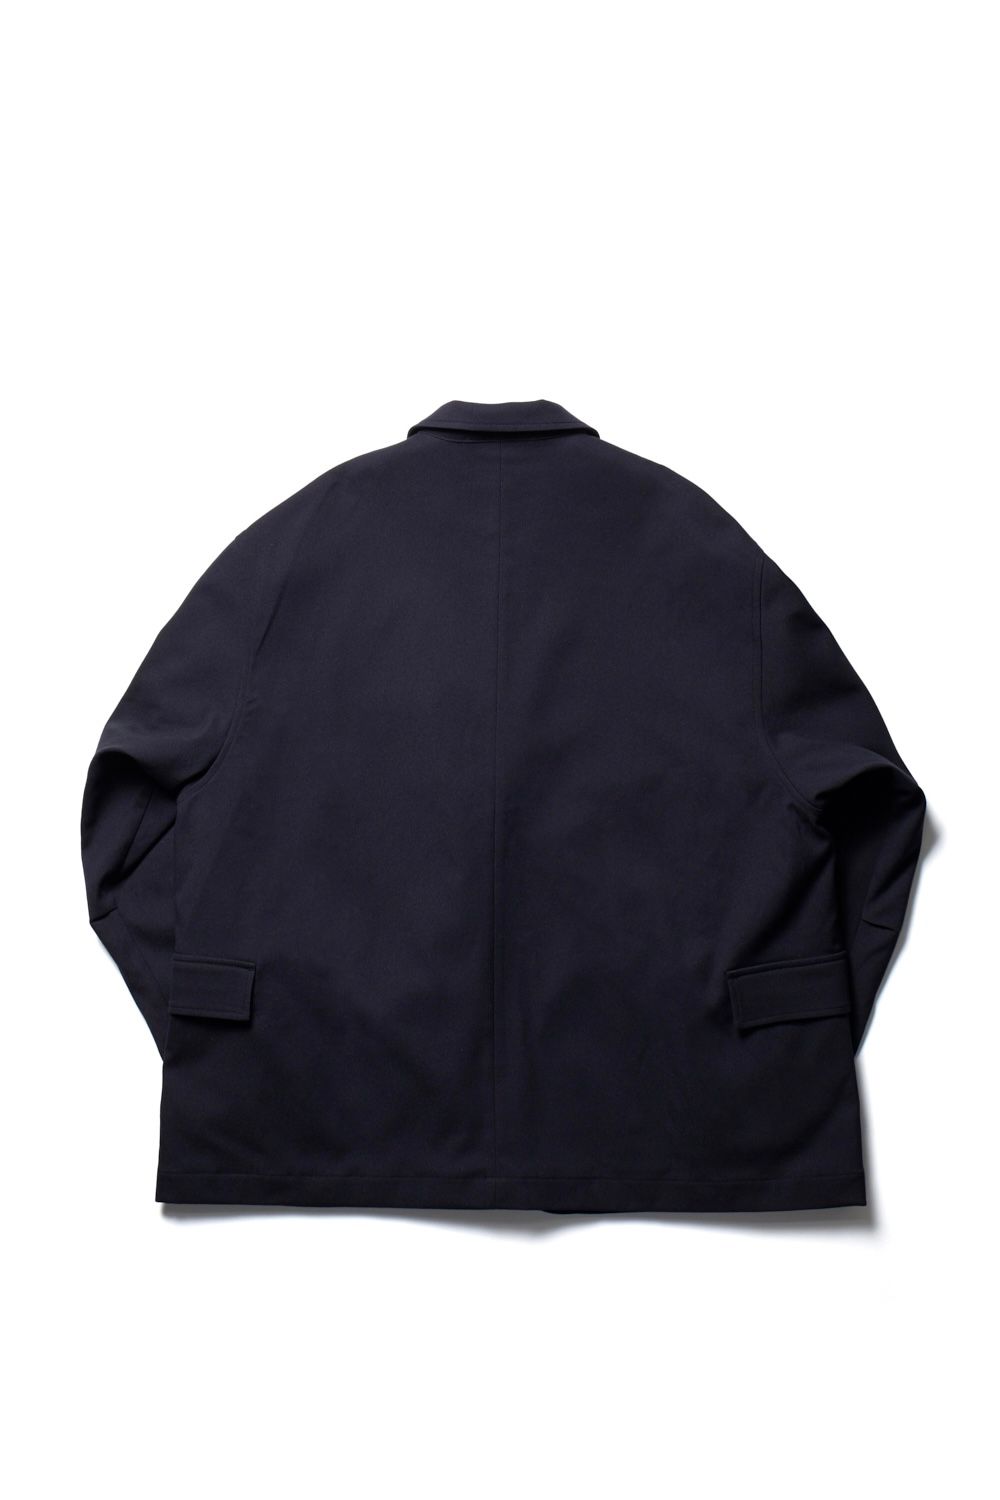 DAIWA PIER39 - tech loose 2b jacket -dark navy- 22aw | asterisk